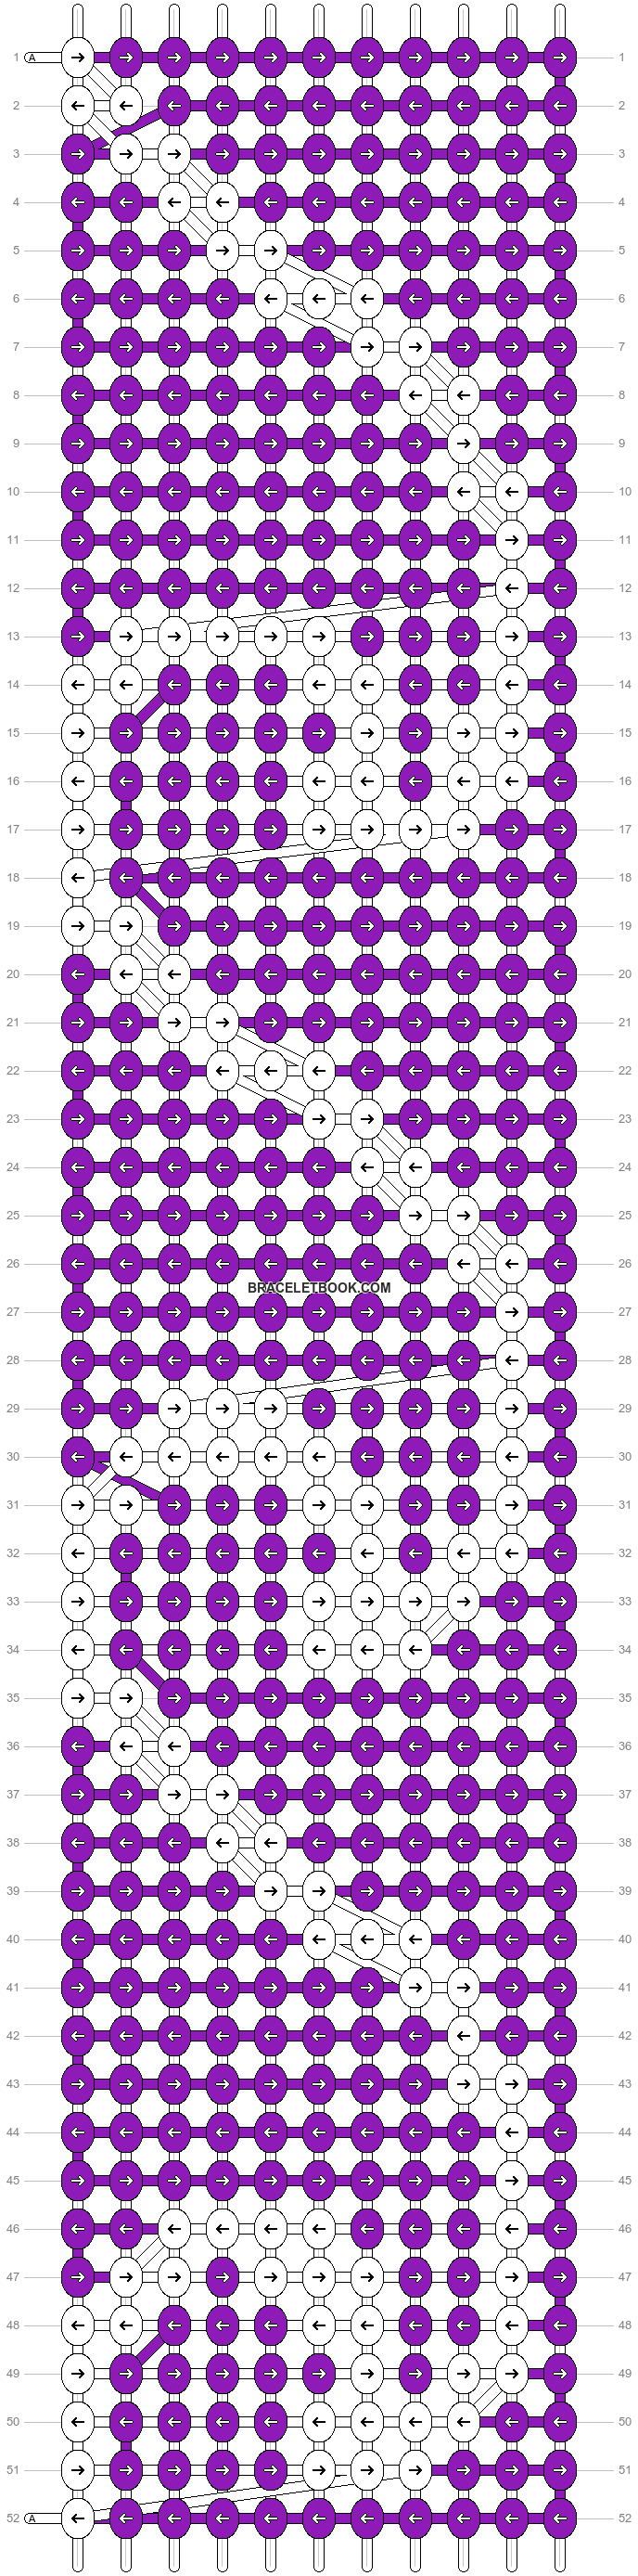 Alpha pattern #45382 variation #66975 pattern